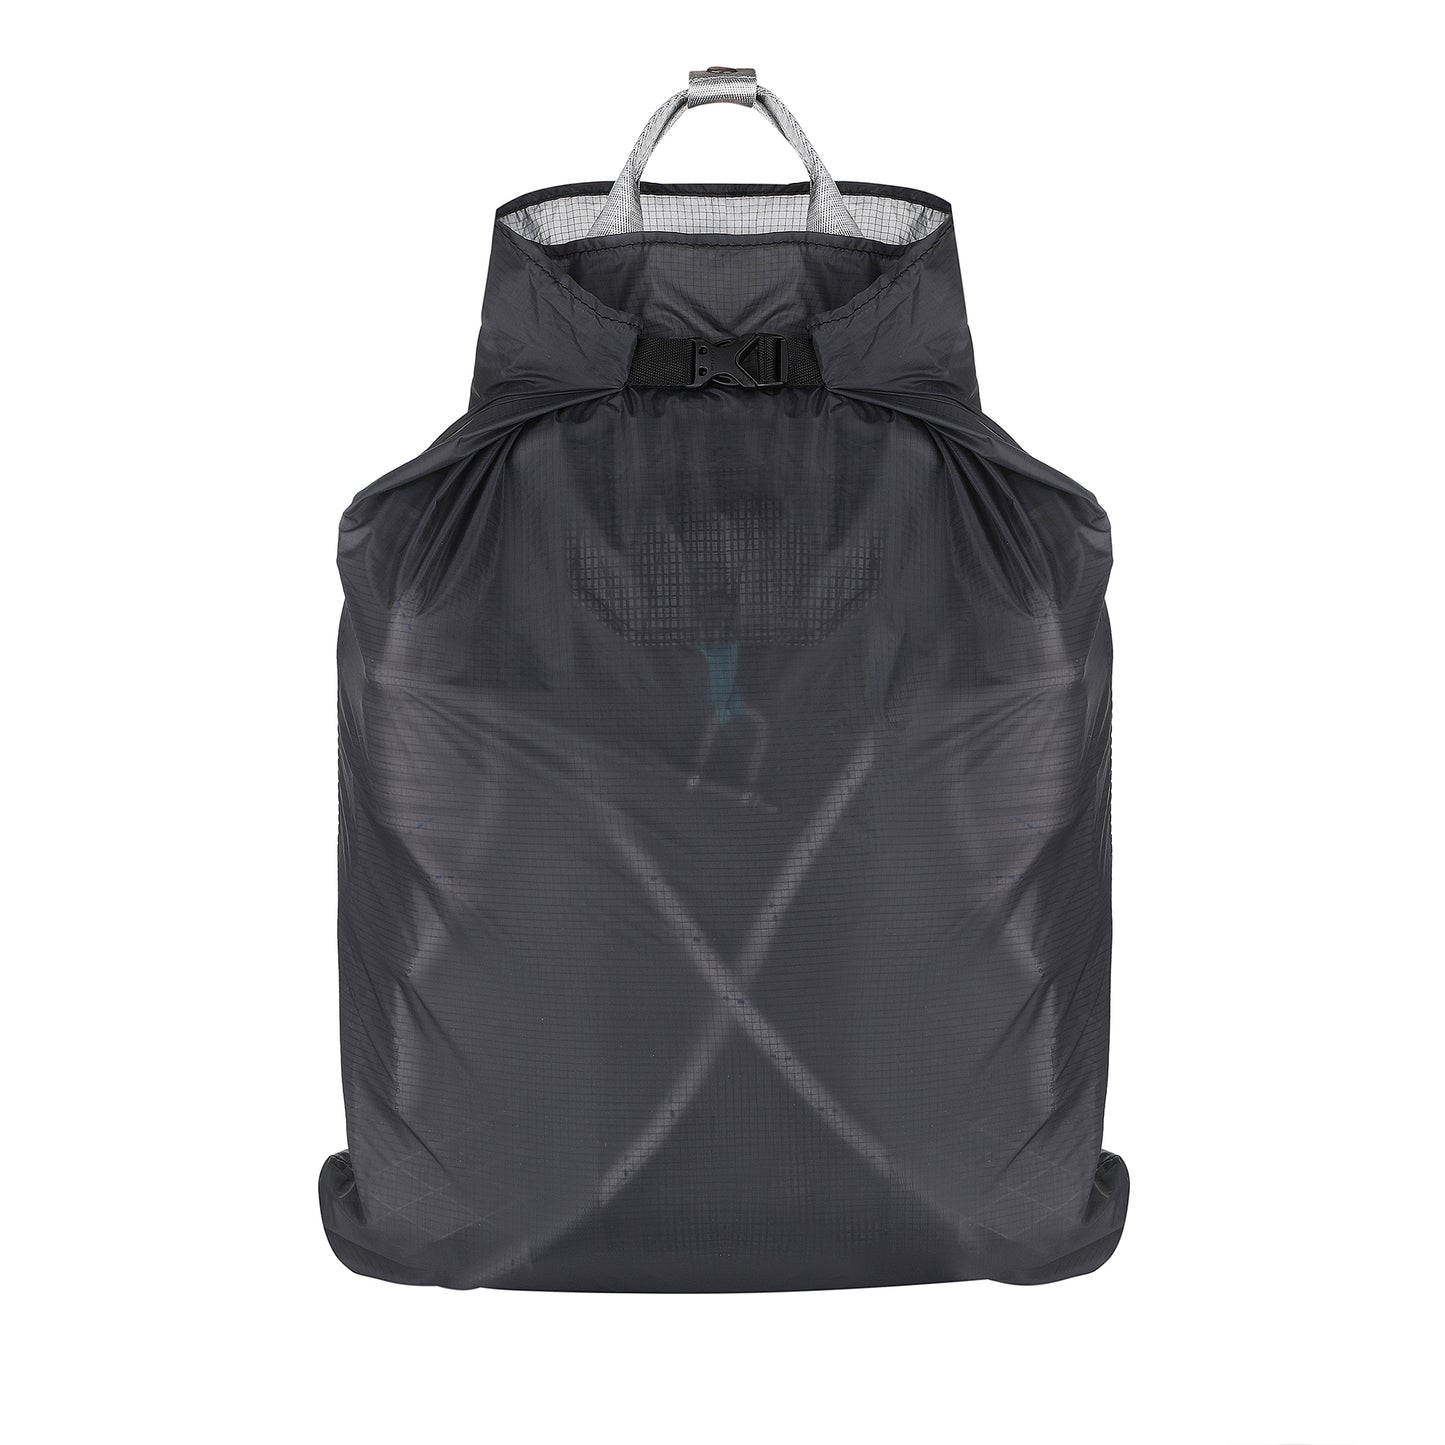 Designer handbag-backpack with raincover